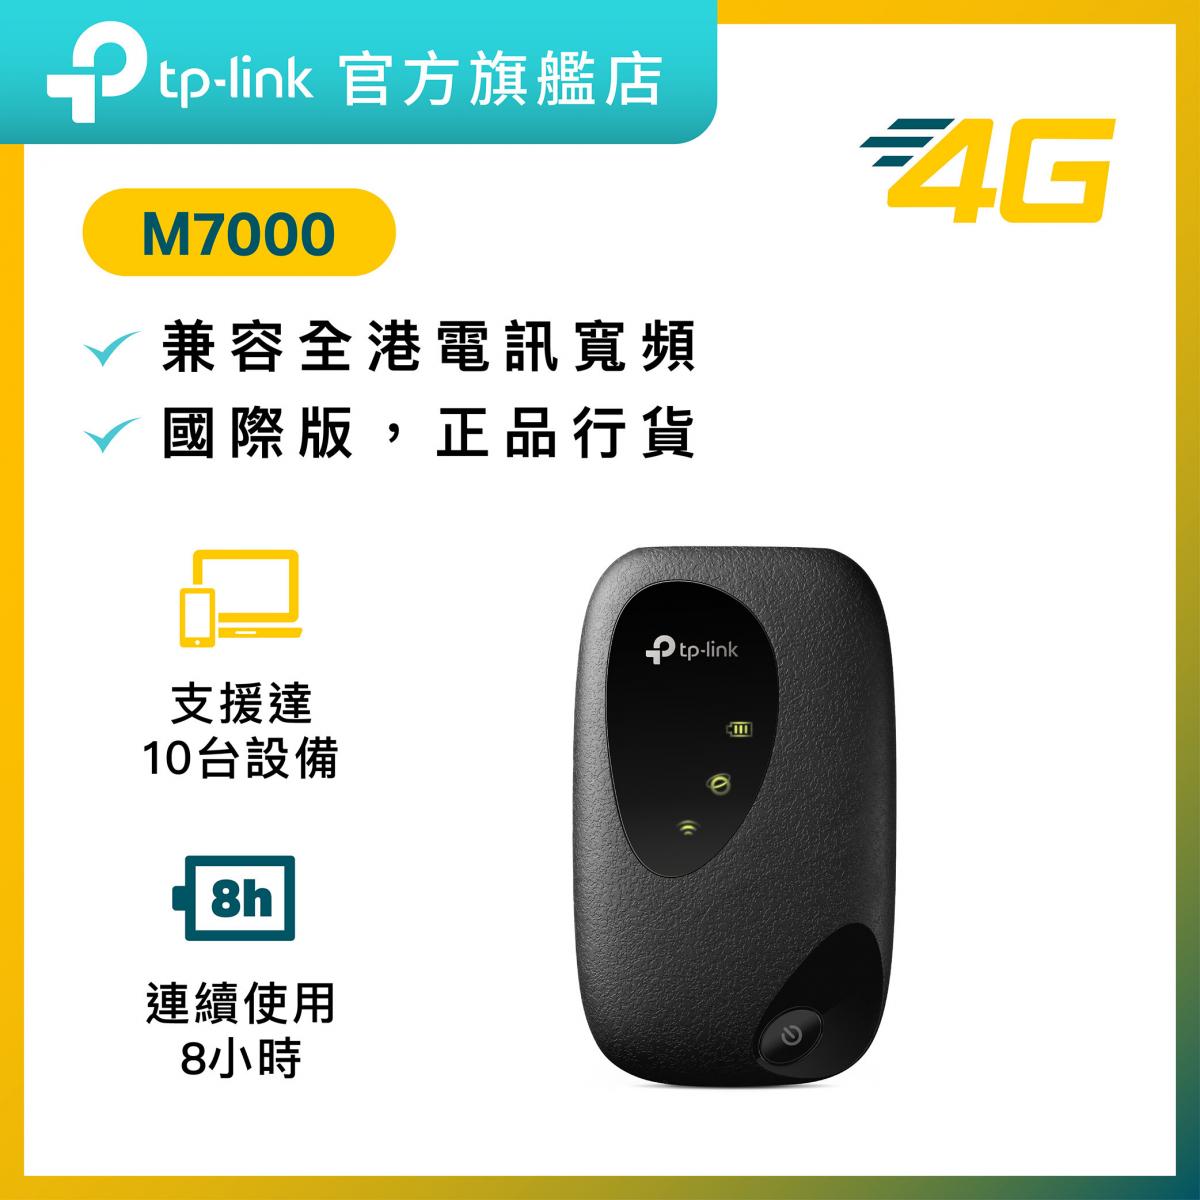 M7000 4G LTE Mobile Wi-Fi / WiFi 蛋